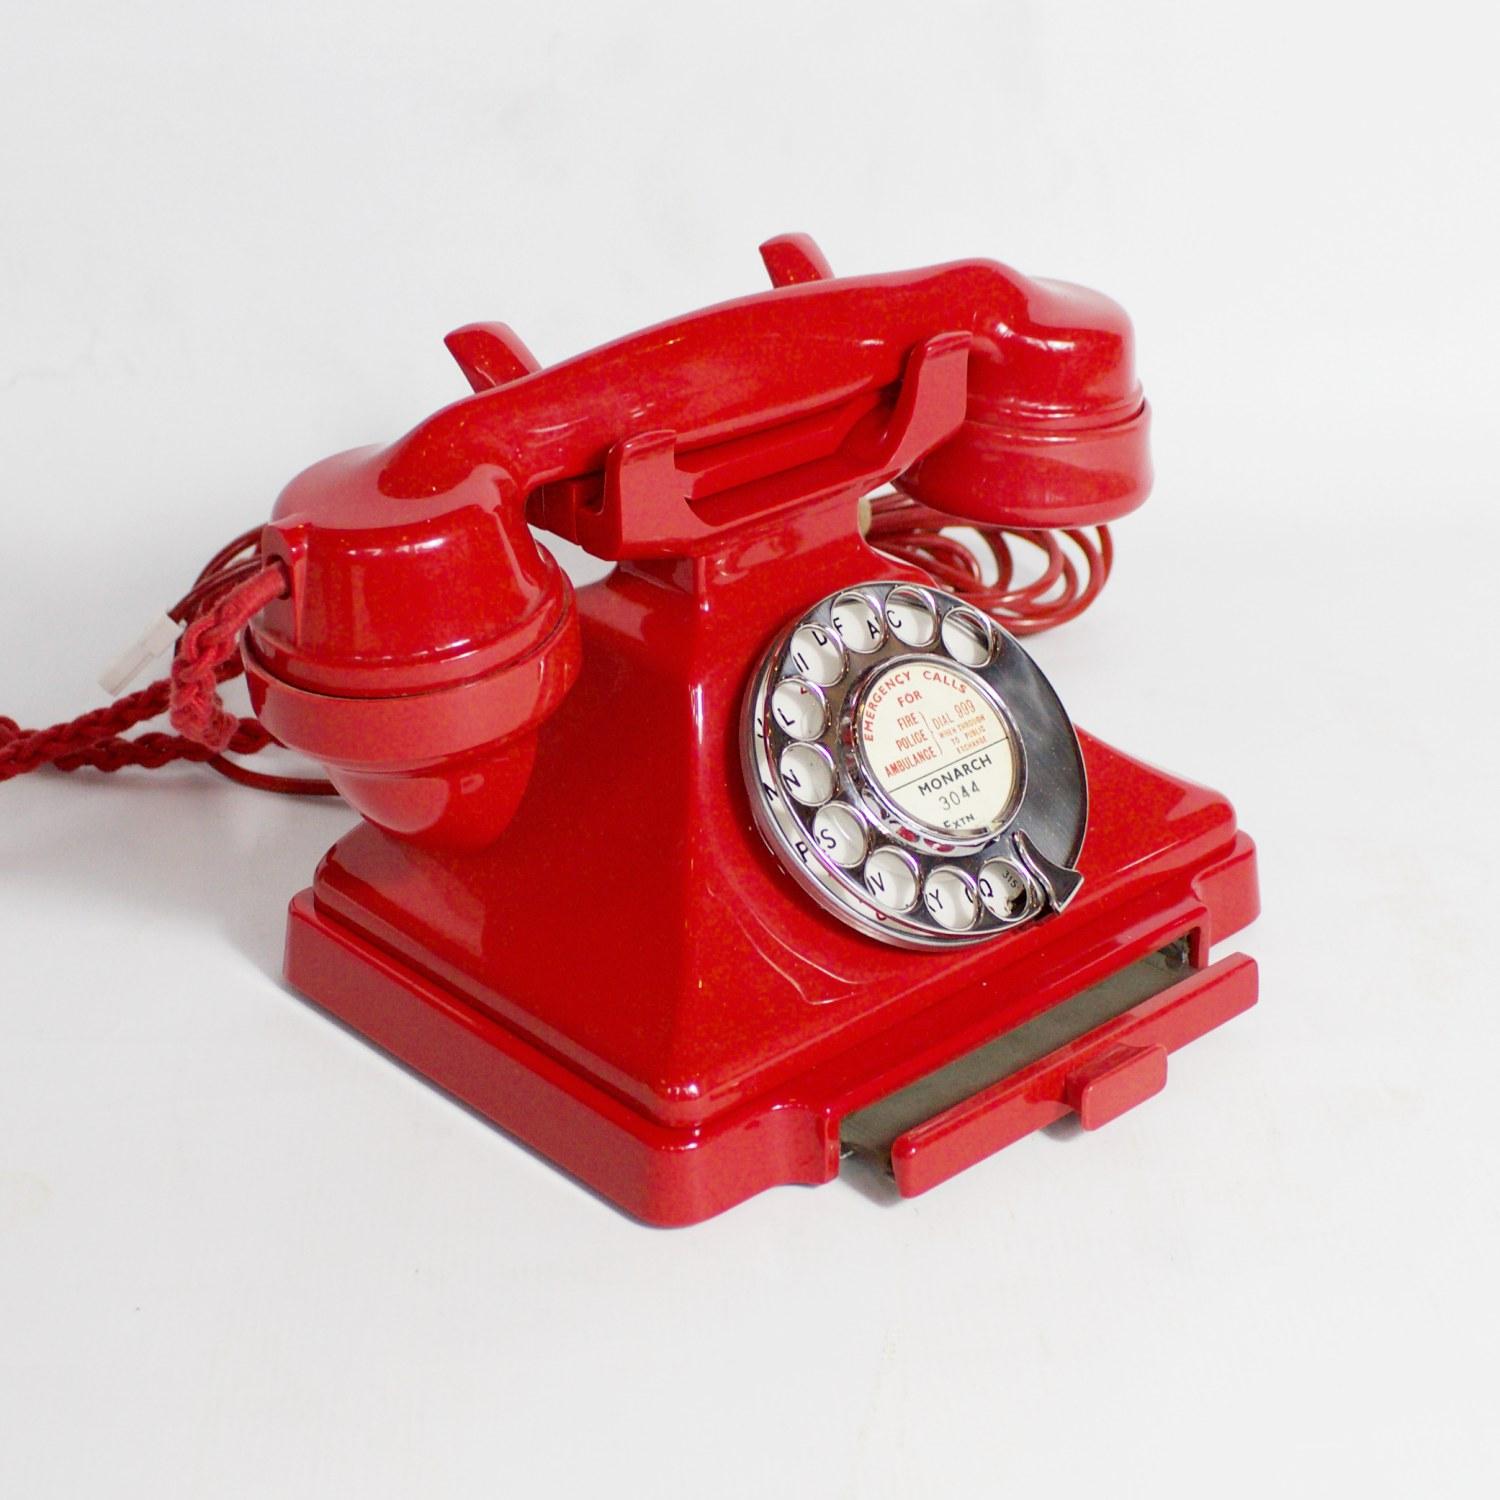 1956 phone